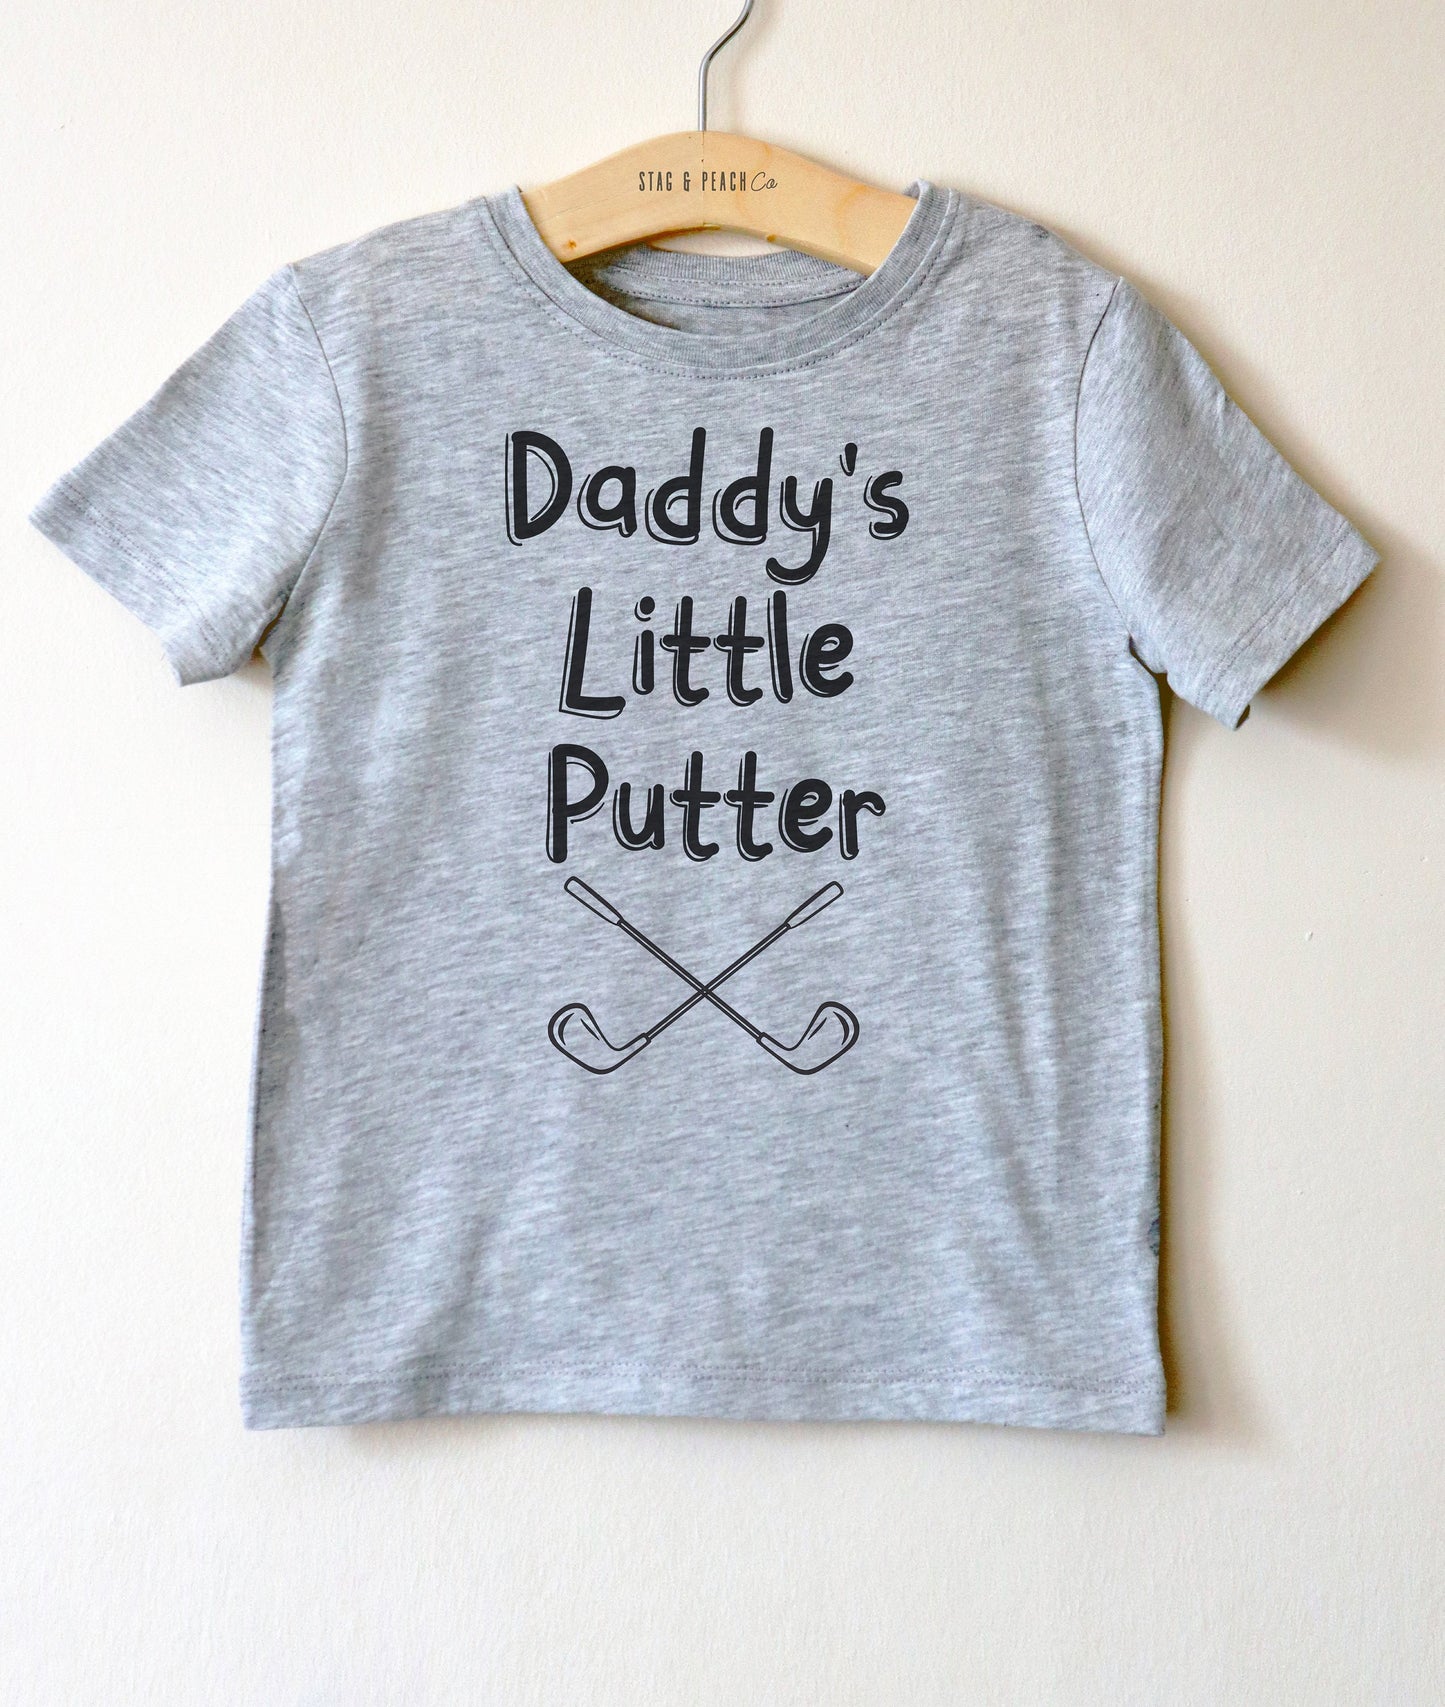 Daddy's Little Putter Kids Shirt - Kids Golf Shirt, Golf Shirt, Golfing Shirt, Future Golfer, Golf Son, Golf Daughter, Golf Birthday Party